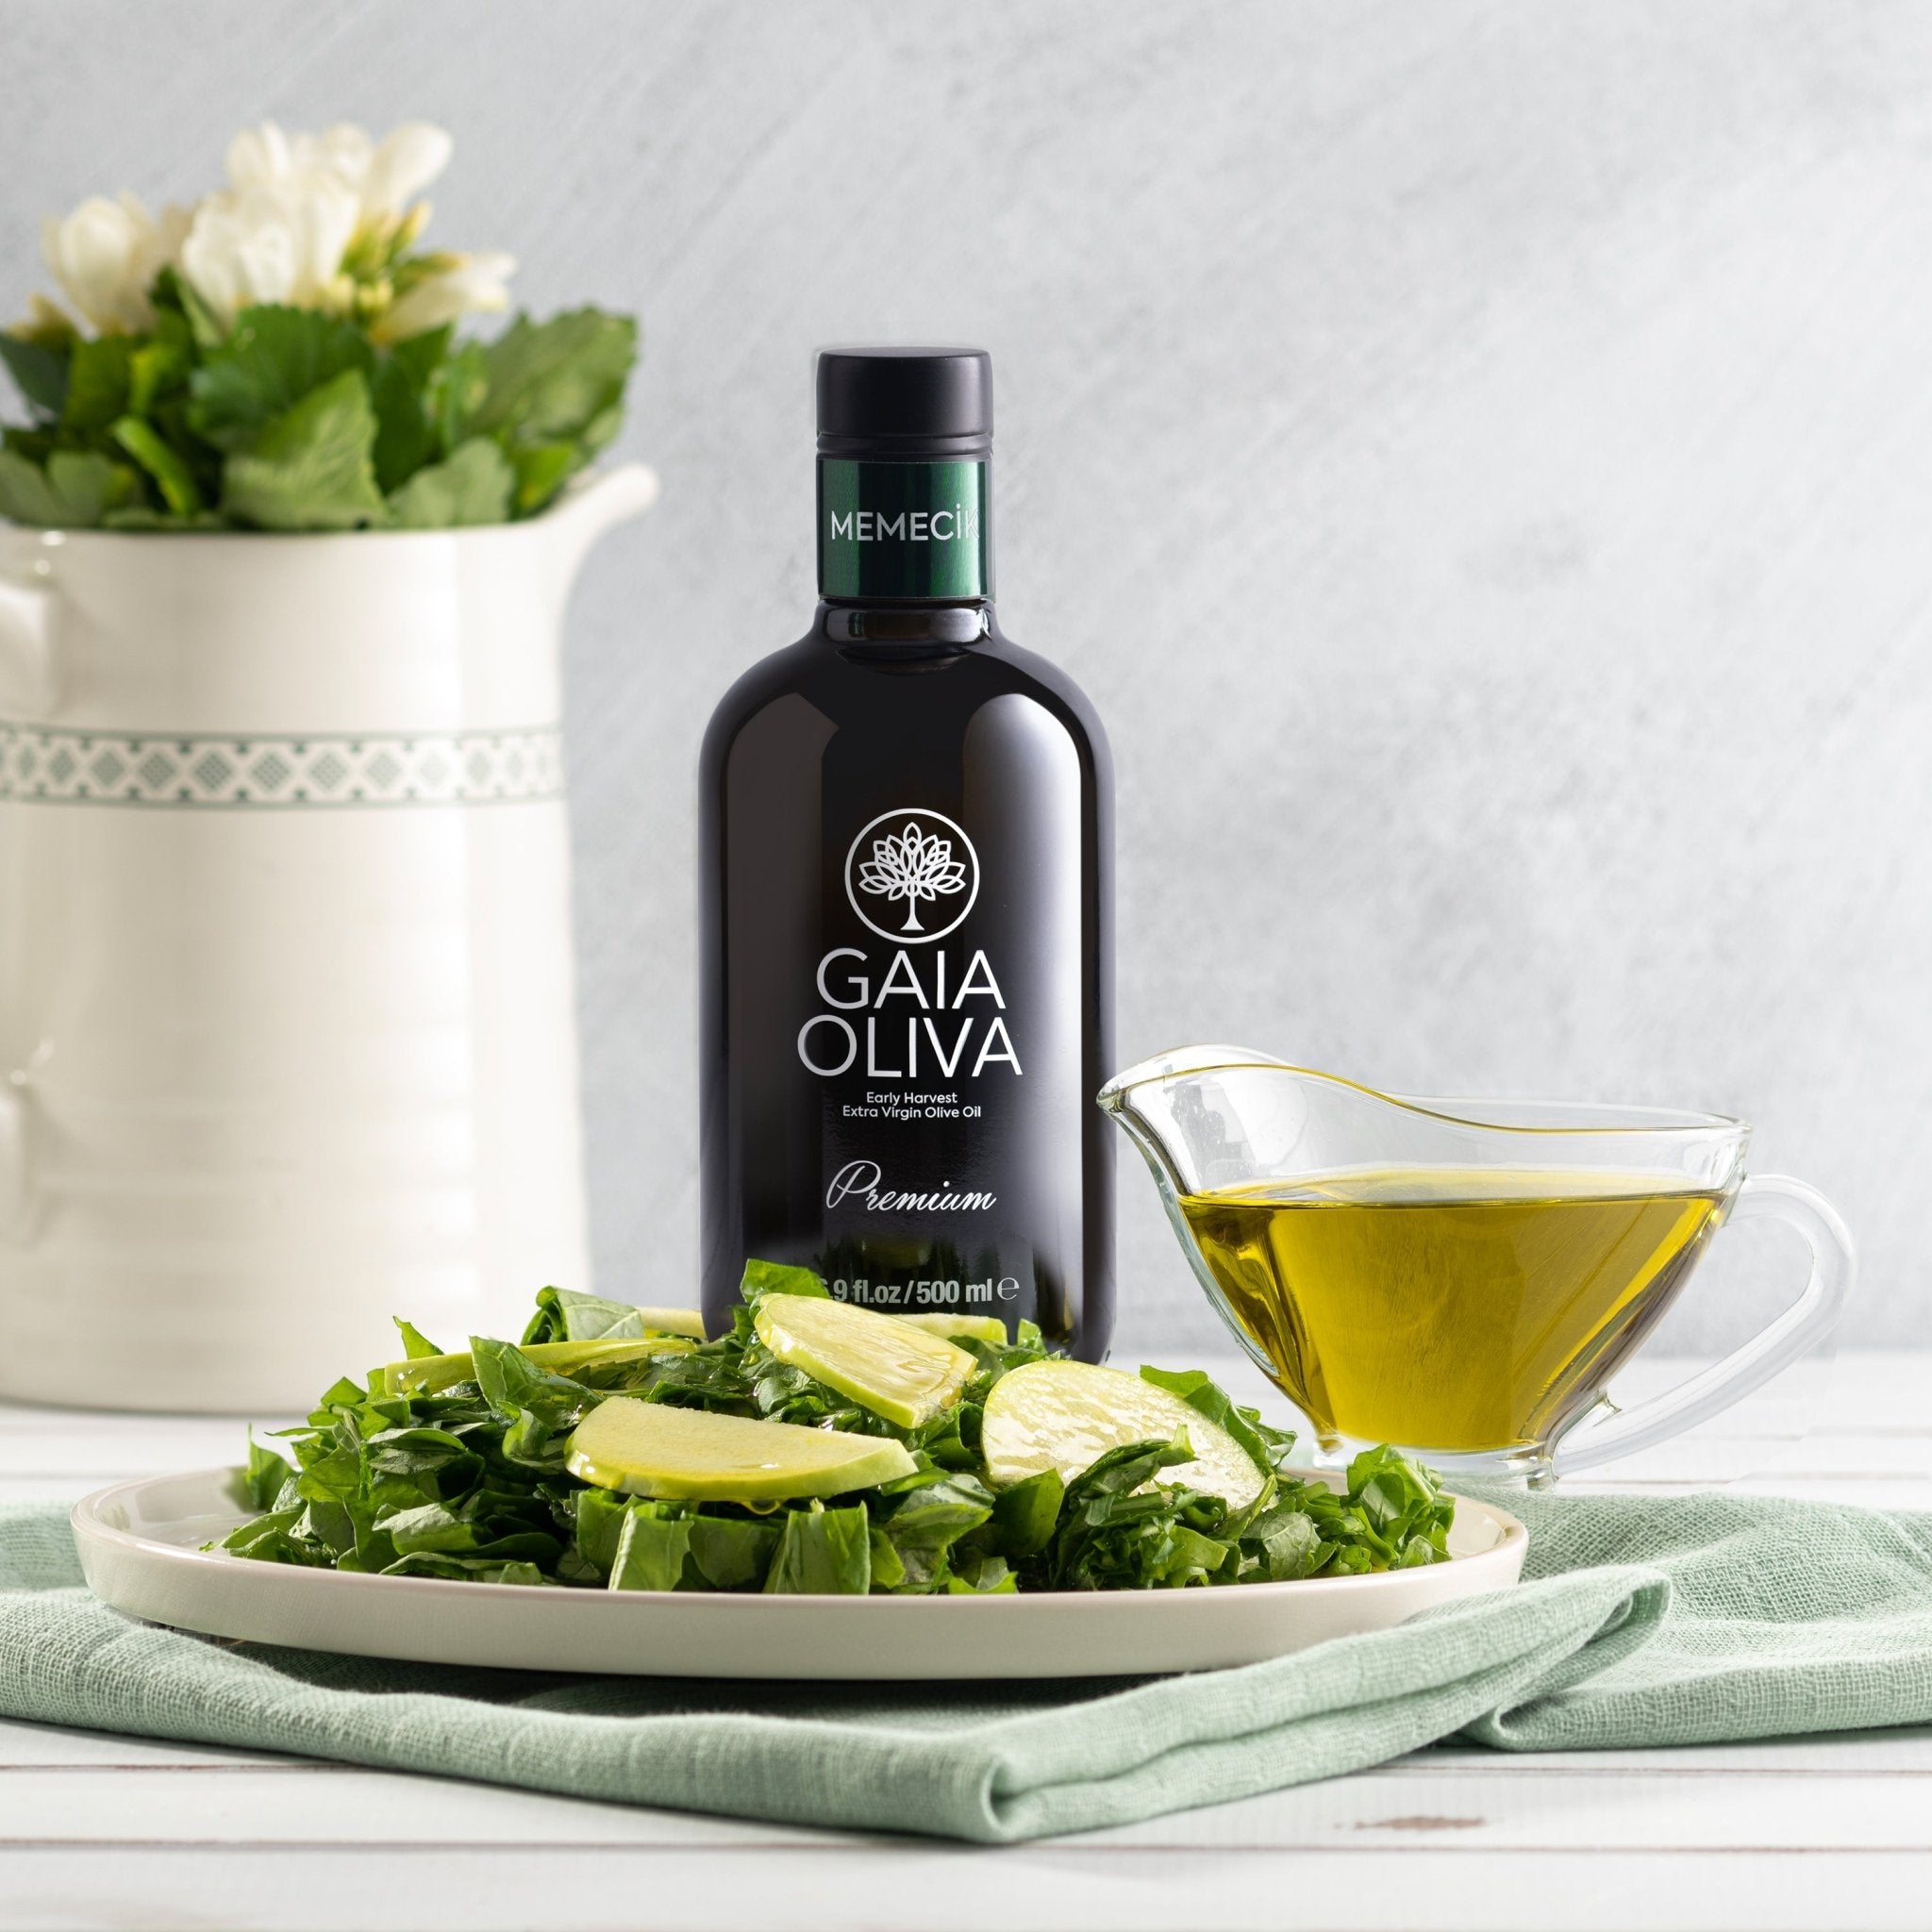 Gaia Oliva Extra Virgin Olive Oil (Award Winning)